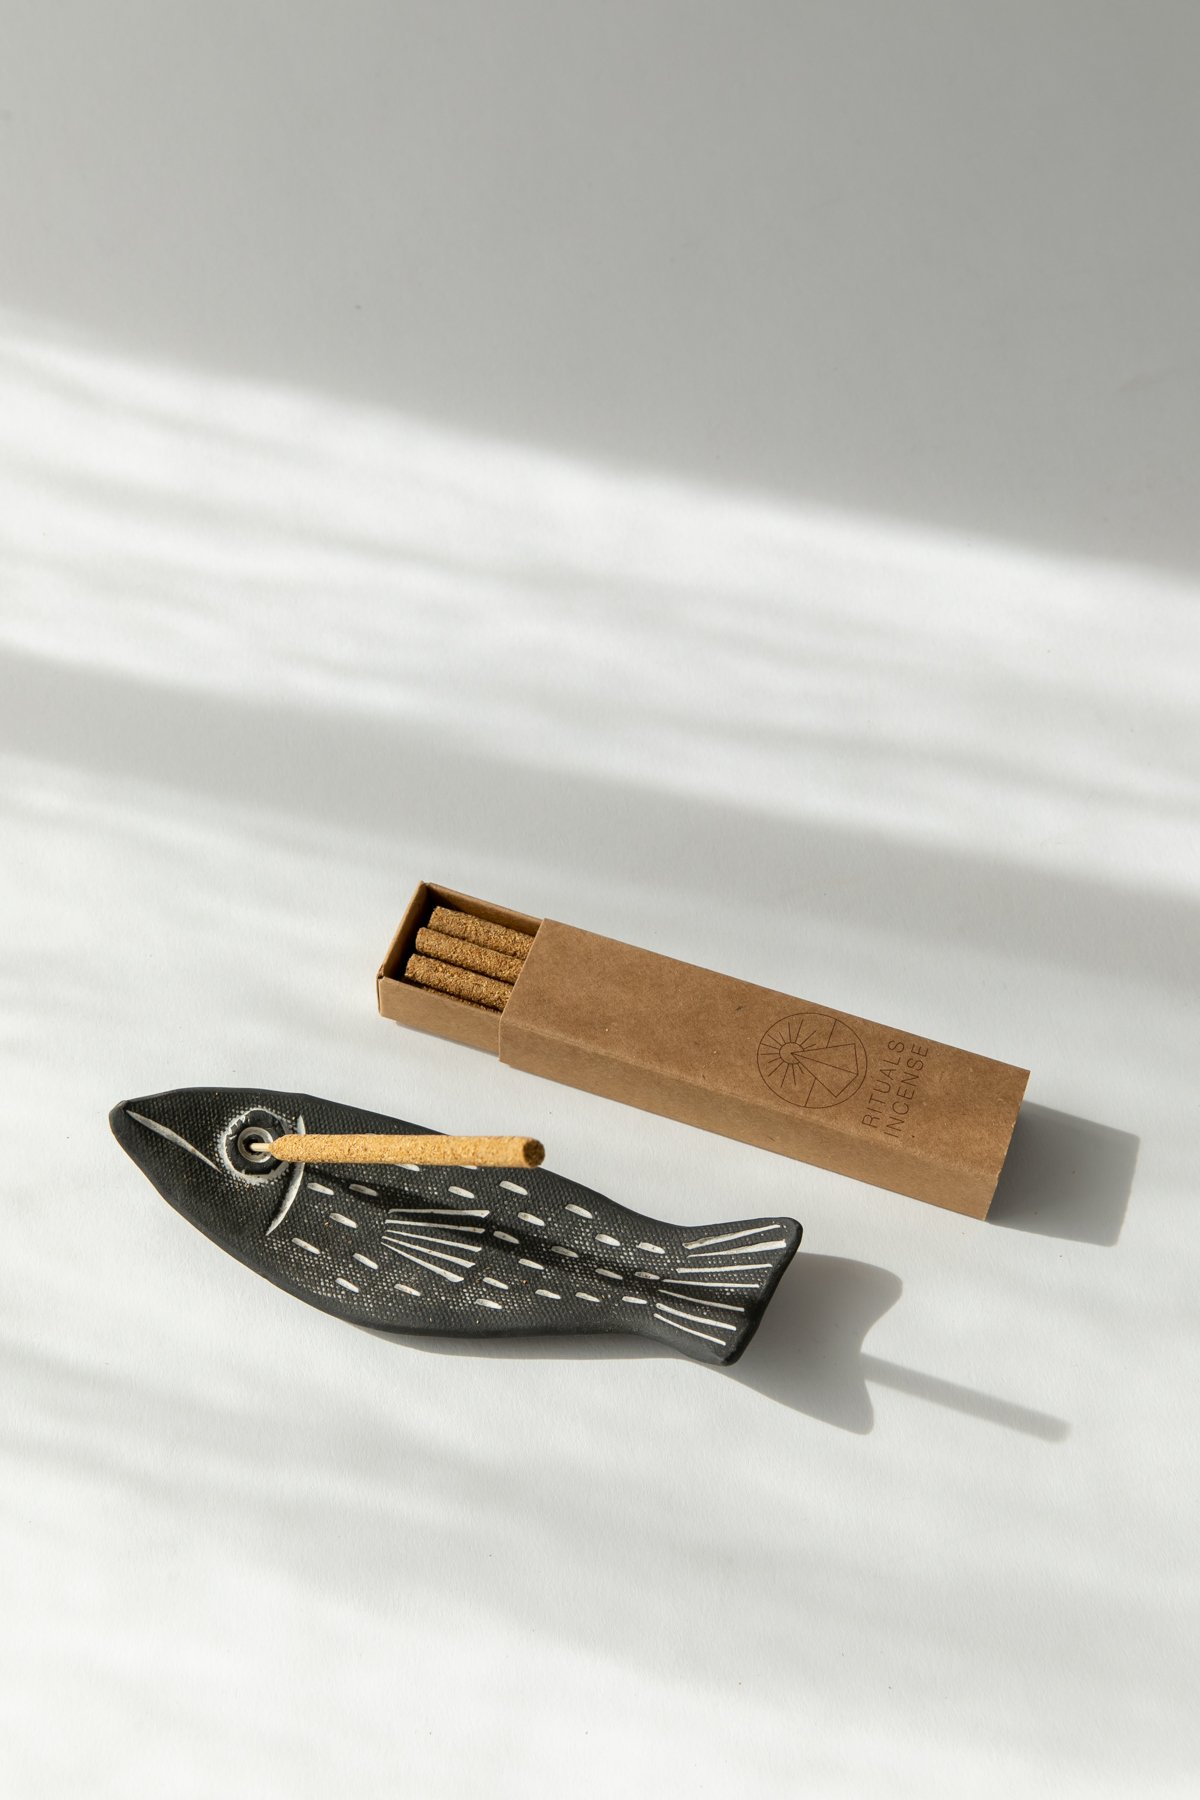 Knotwork LA — Mini Charcoal Fish Incense Holder